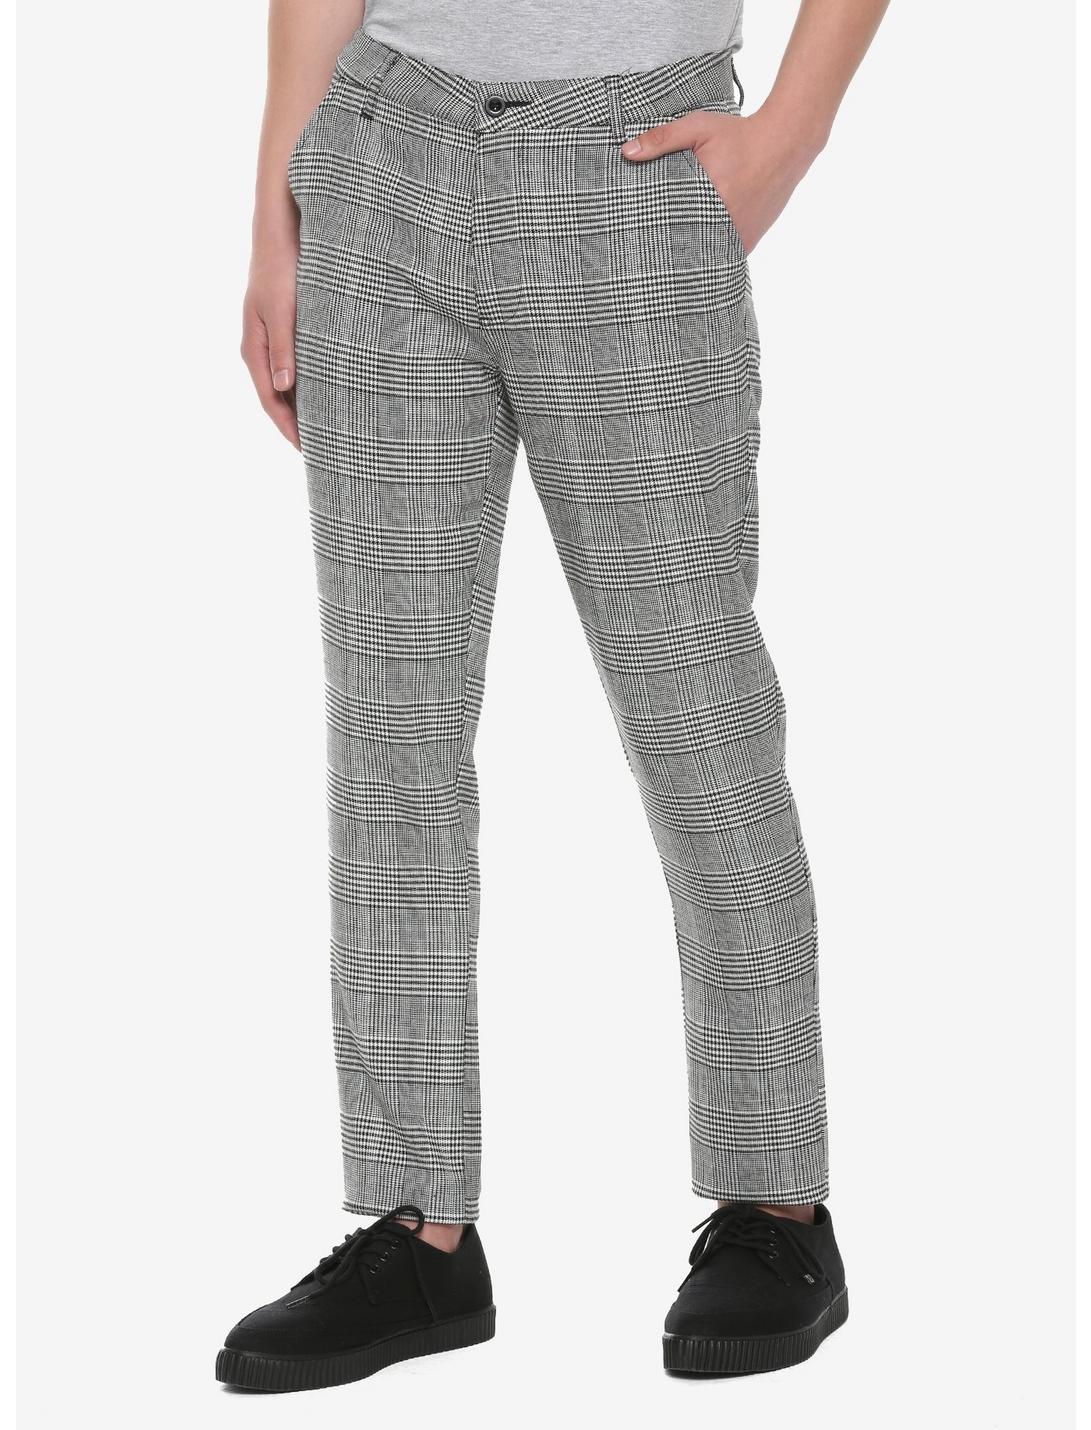 Grey Plaid Pants, PLAID, hi-res